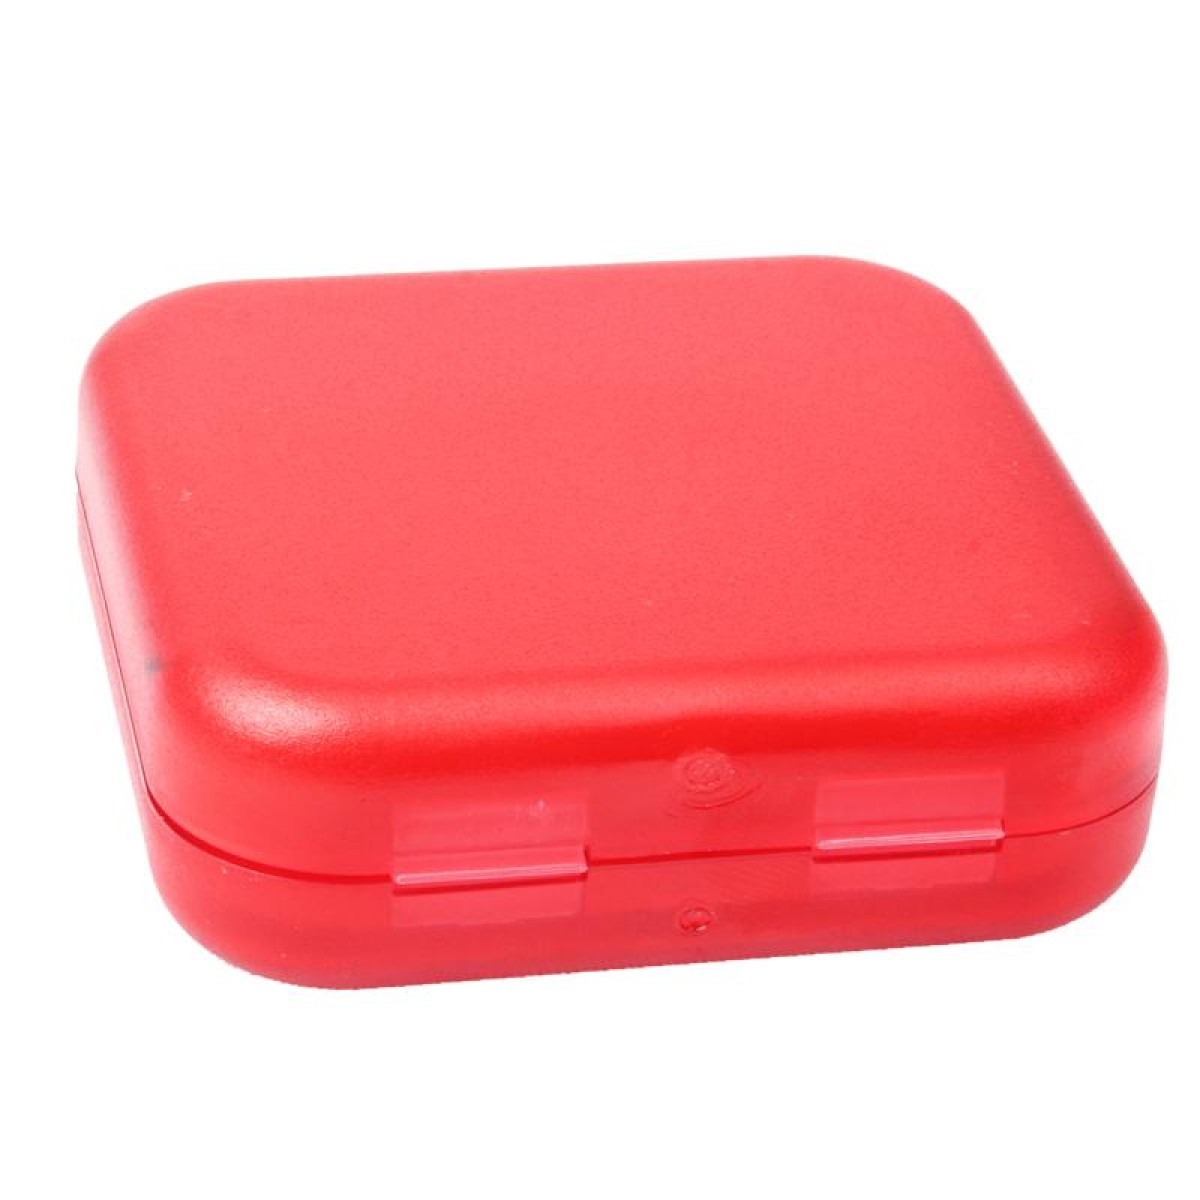 10 PCS 4 Compartments Portable Plastic Cross Pills Medicine Storage Box(Red)